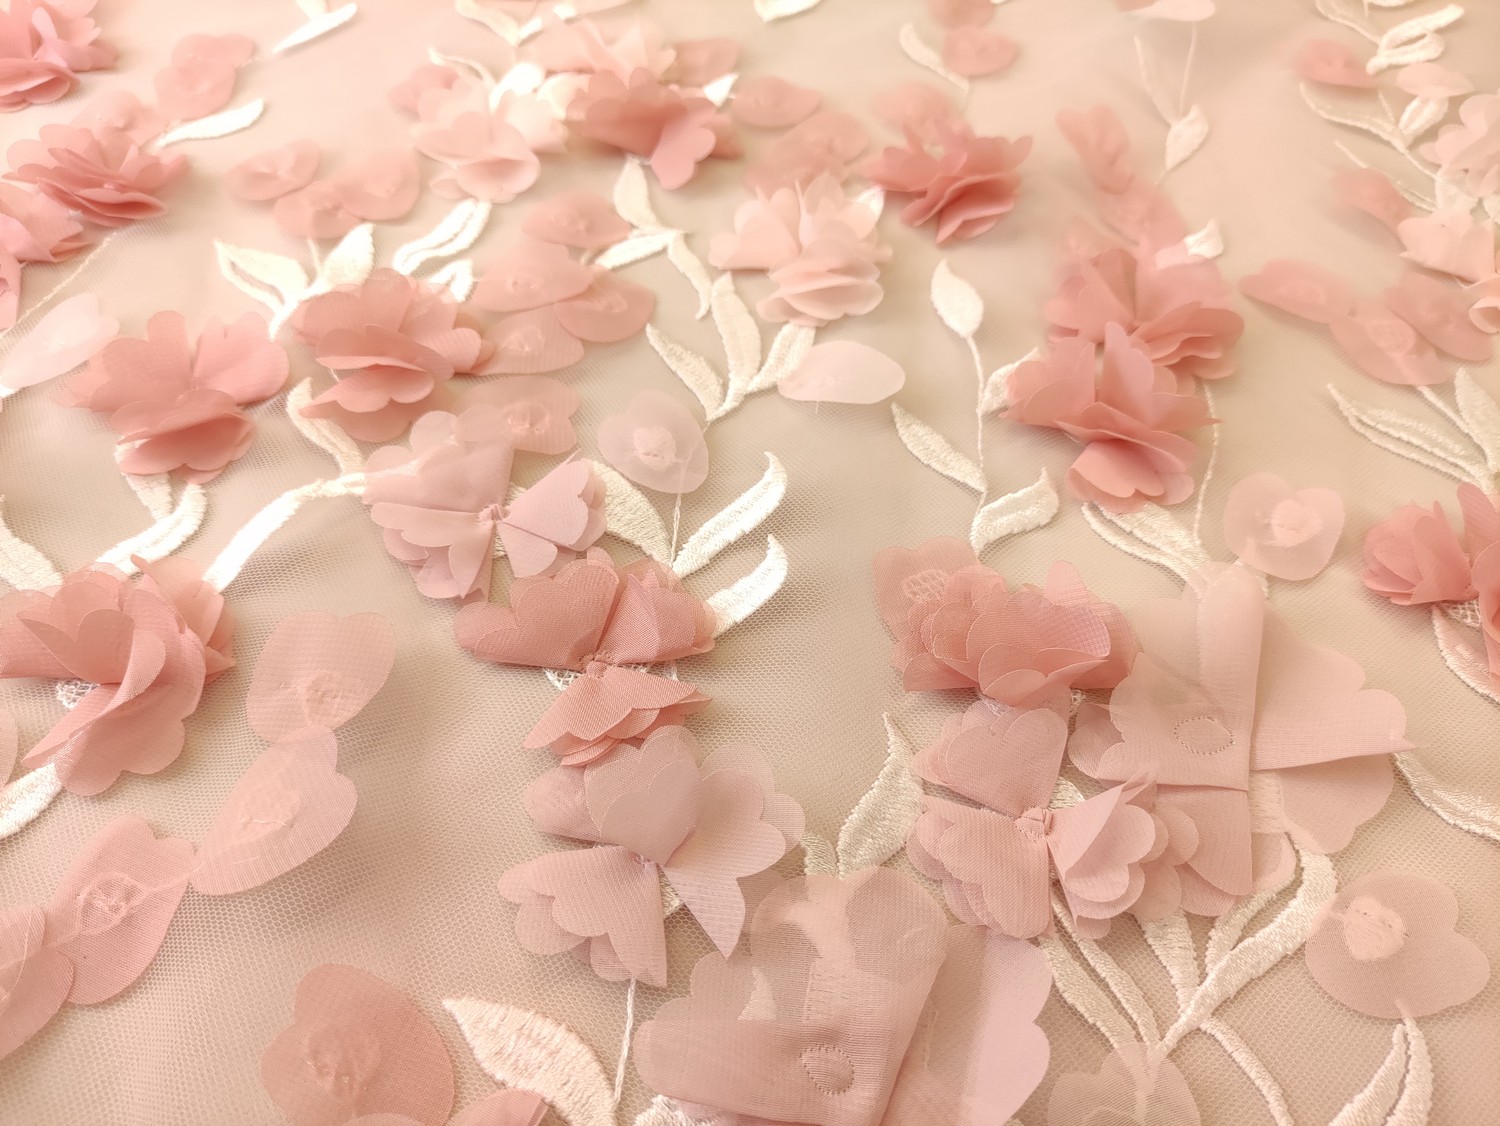 Tessuto Tulle mano seta ricamato con fiori in 3D rosa - Iaia Tessuti